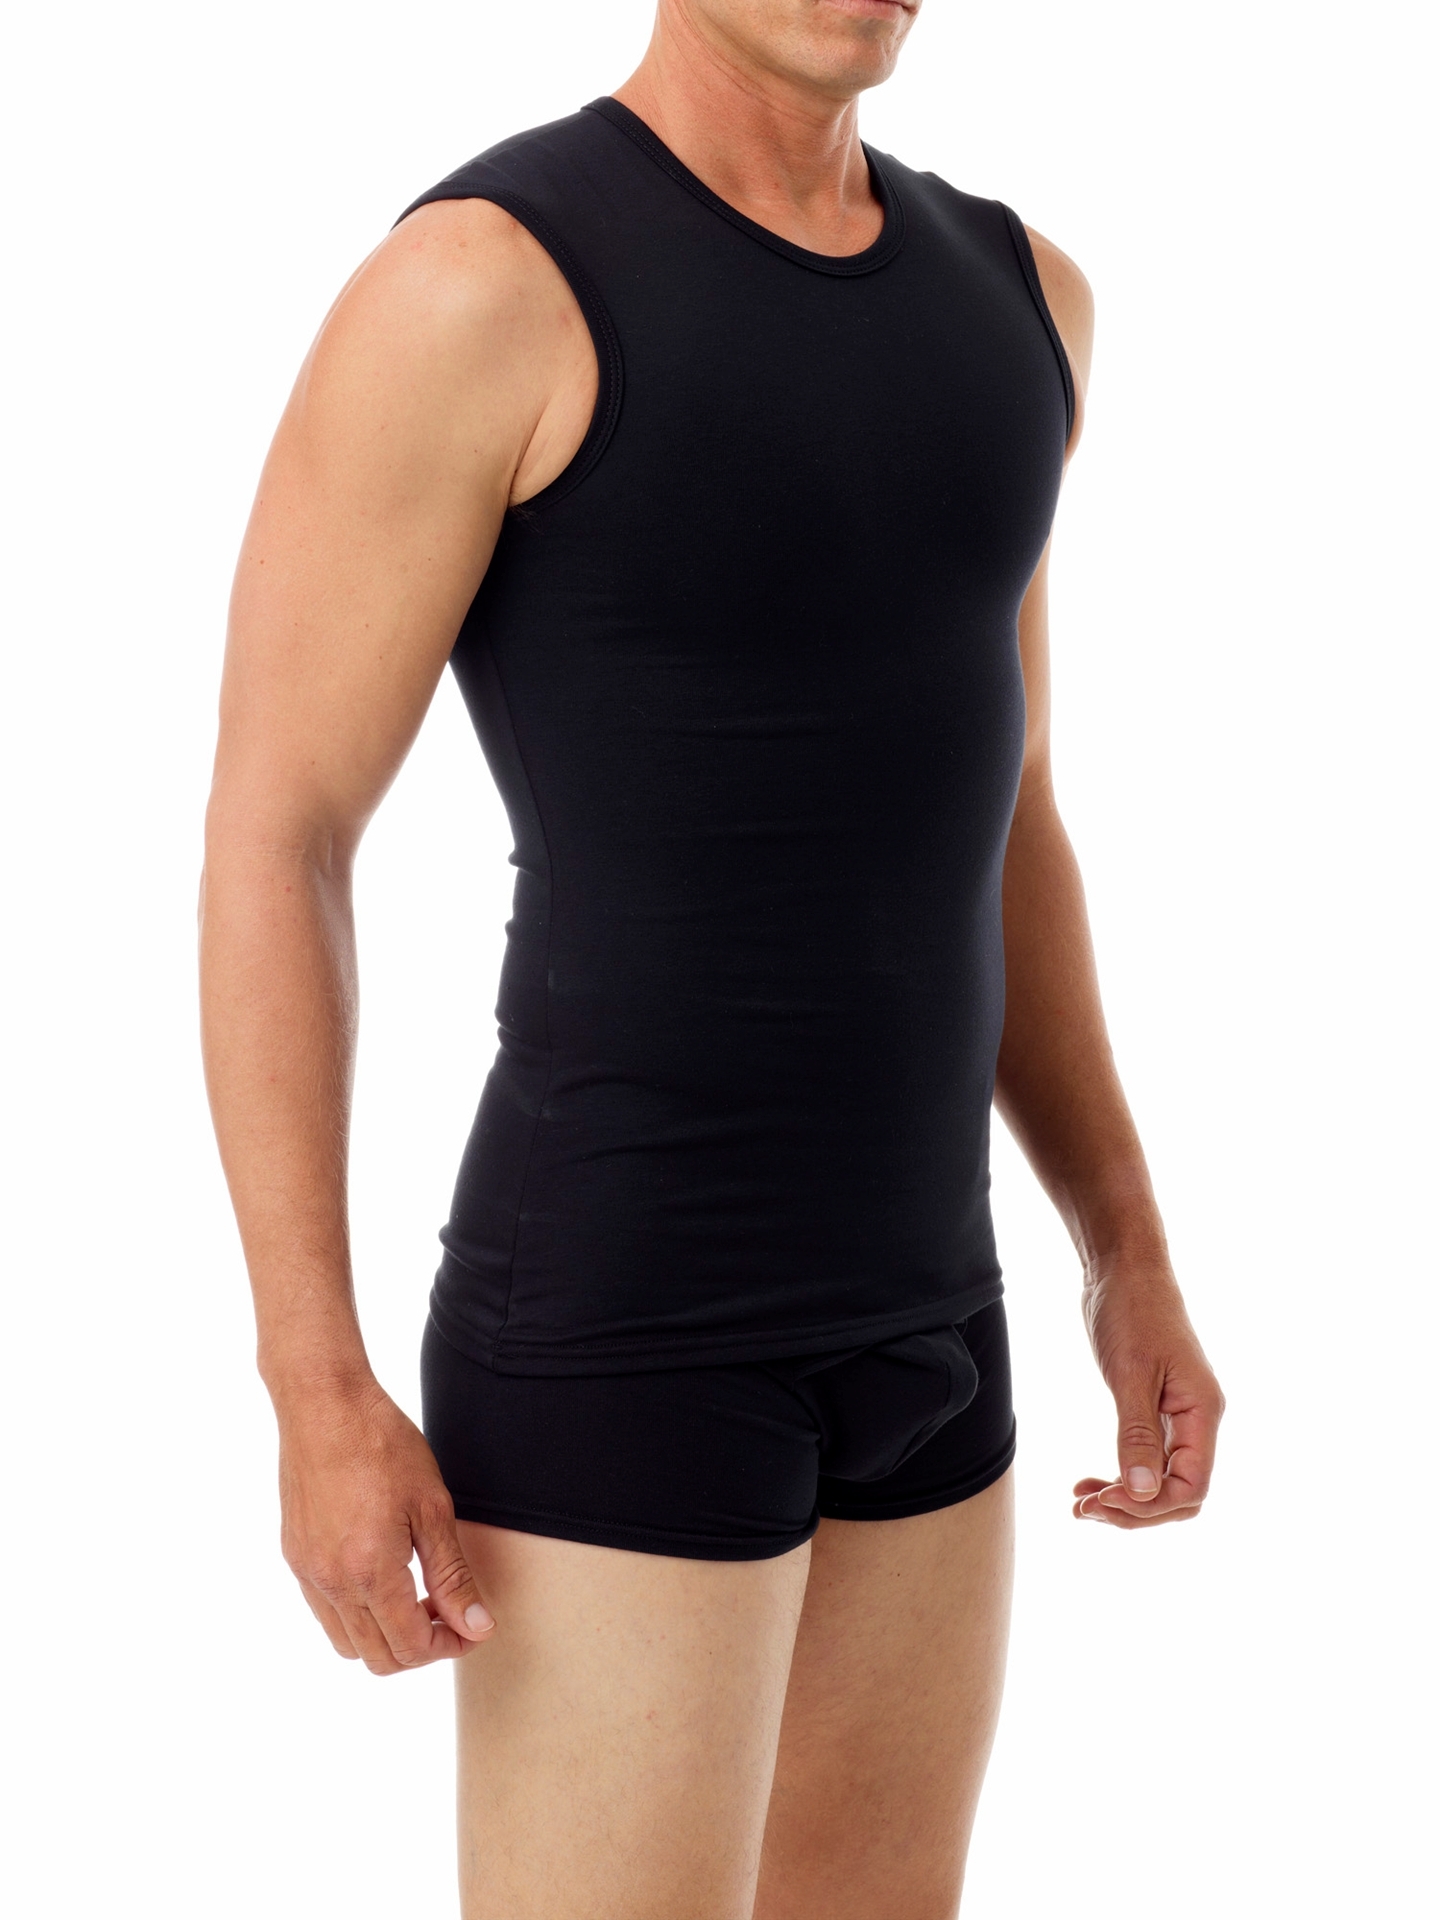 Leisure For Running M.Baxter Mens Short Sleeved Compression Shirt Functional Underwear